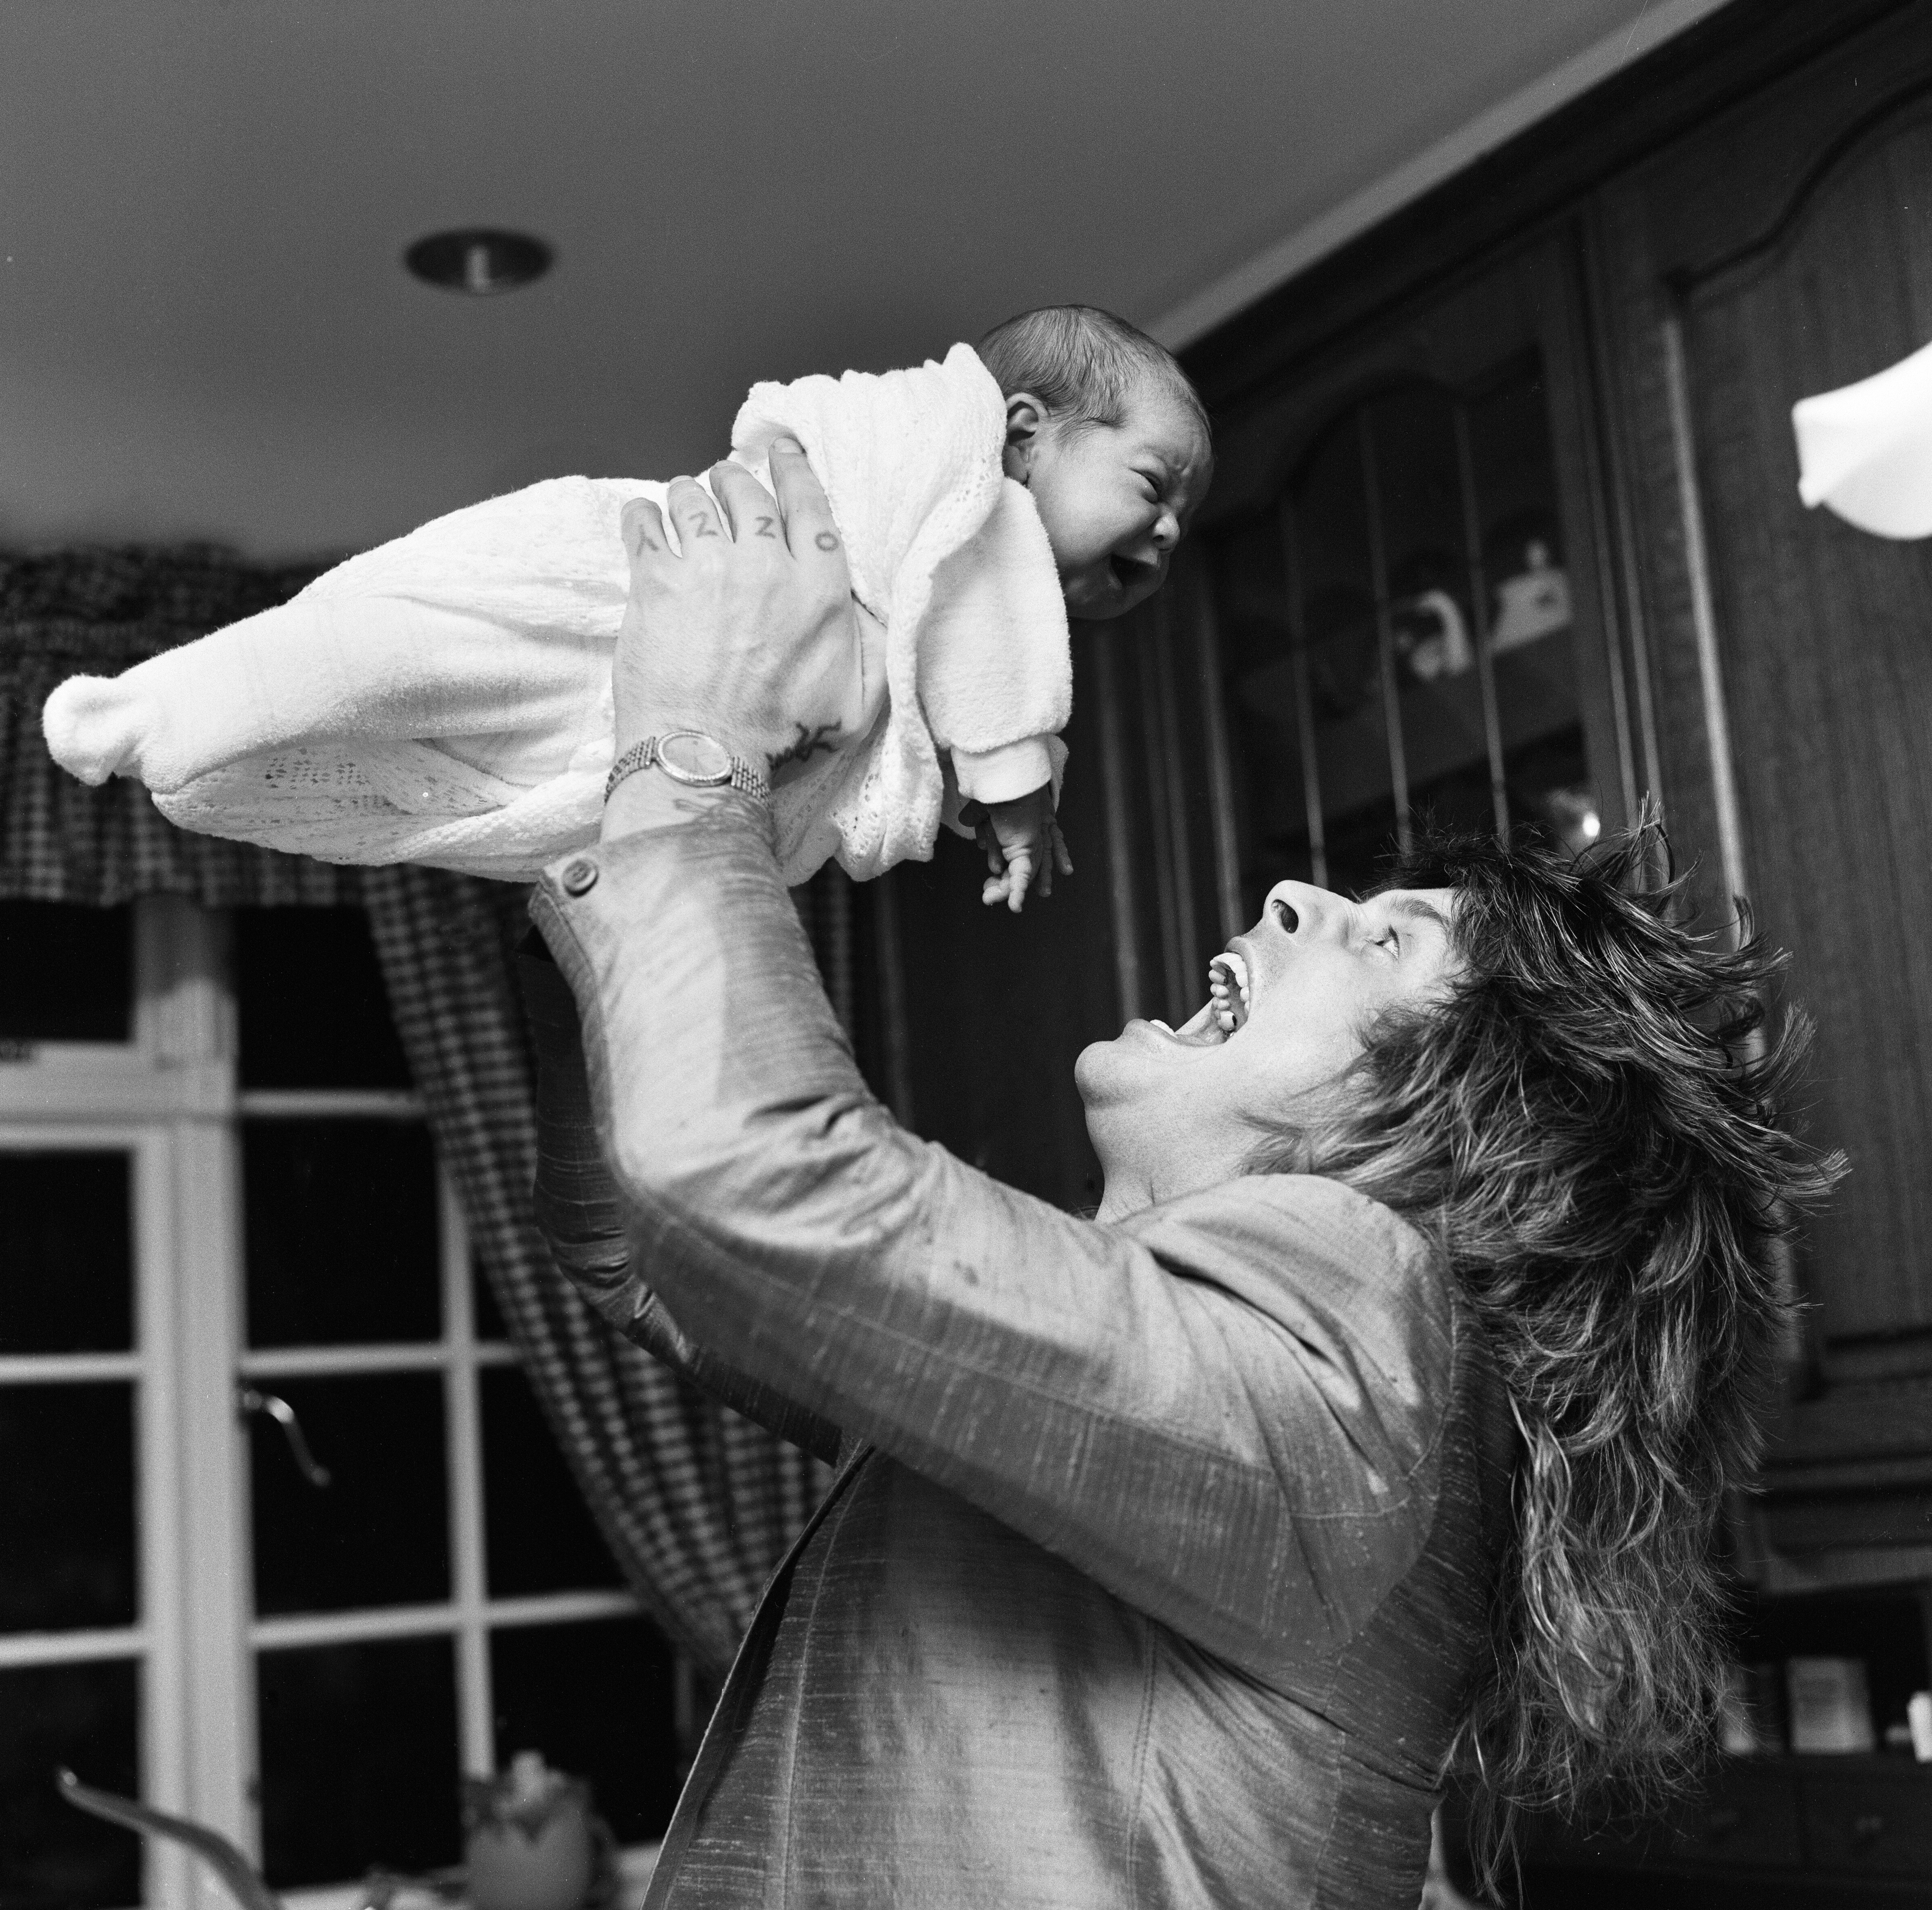 Ozzy Osbourne playfully bonding with his newly born son Jack Osbourne on November 25, 1985. | Source: Getty Images